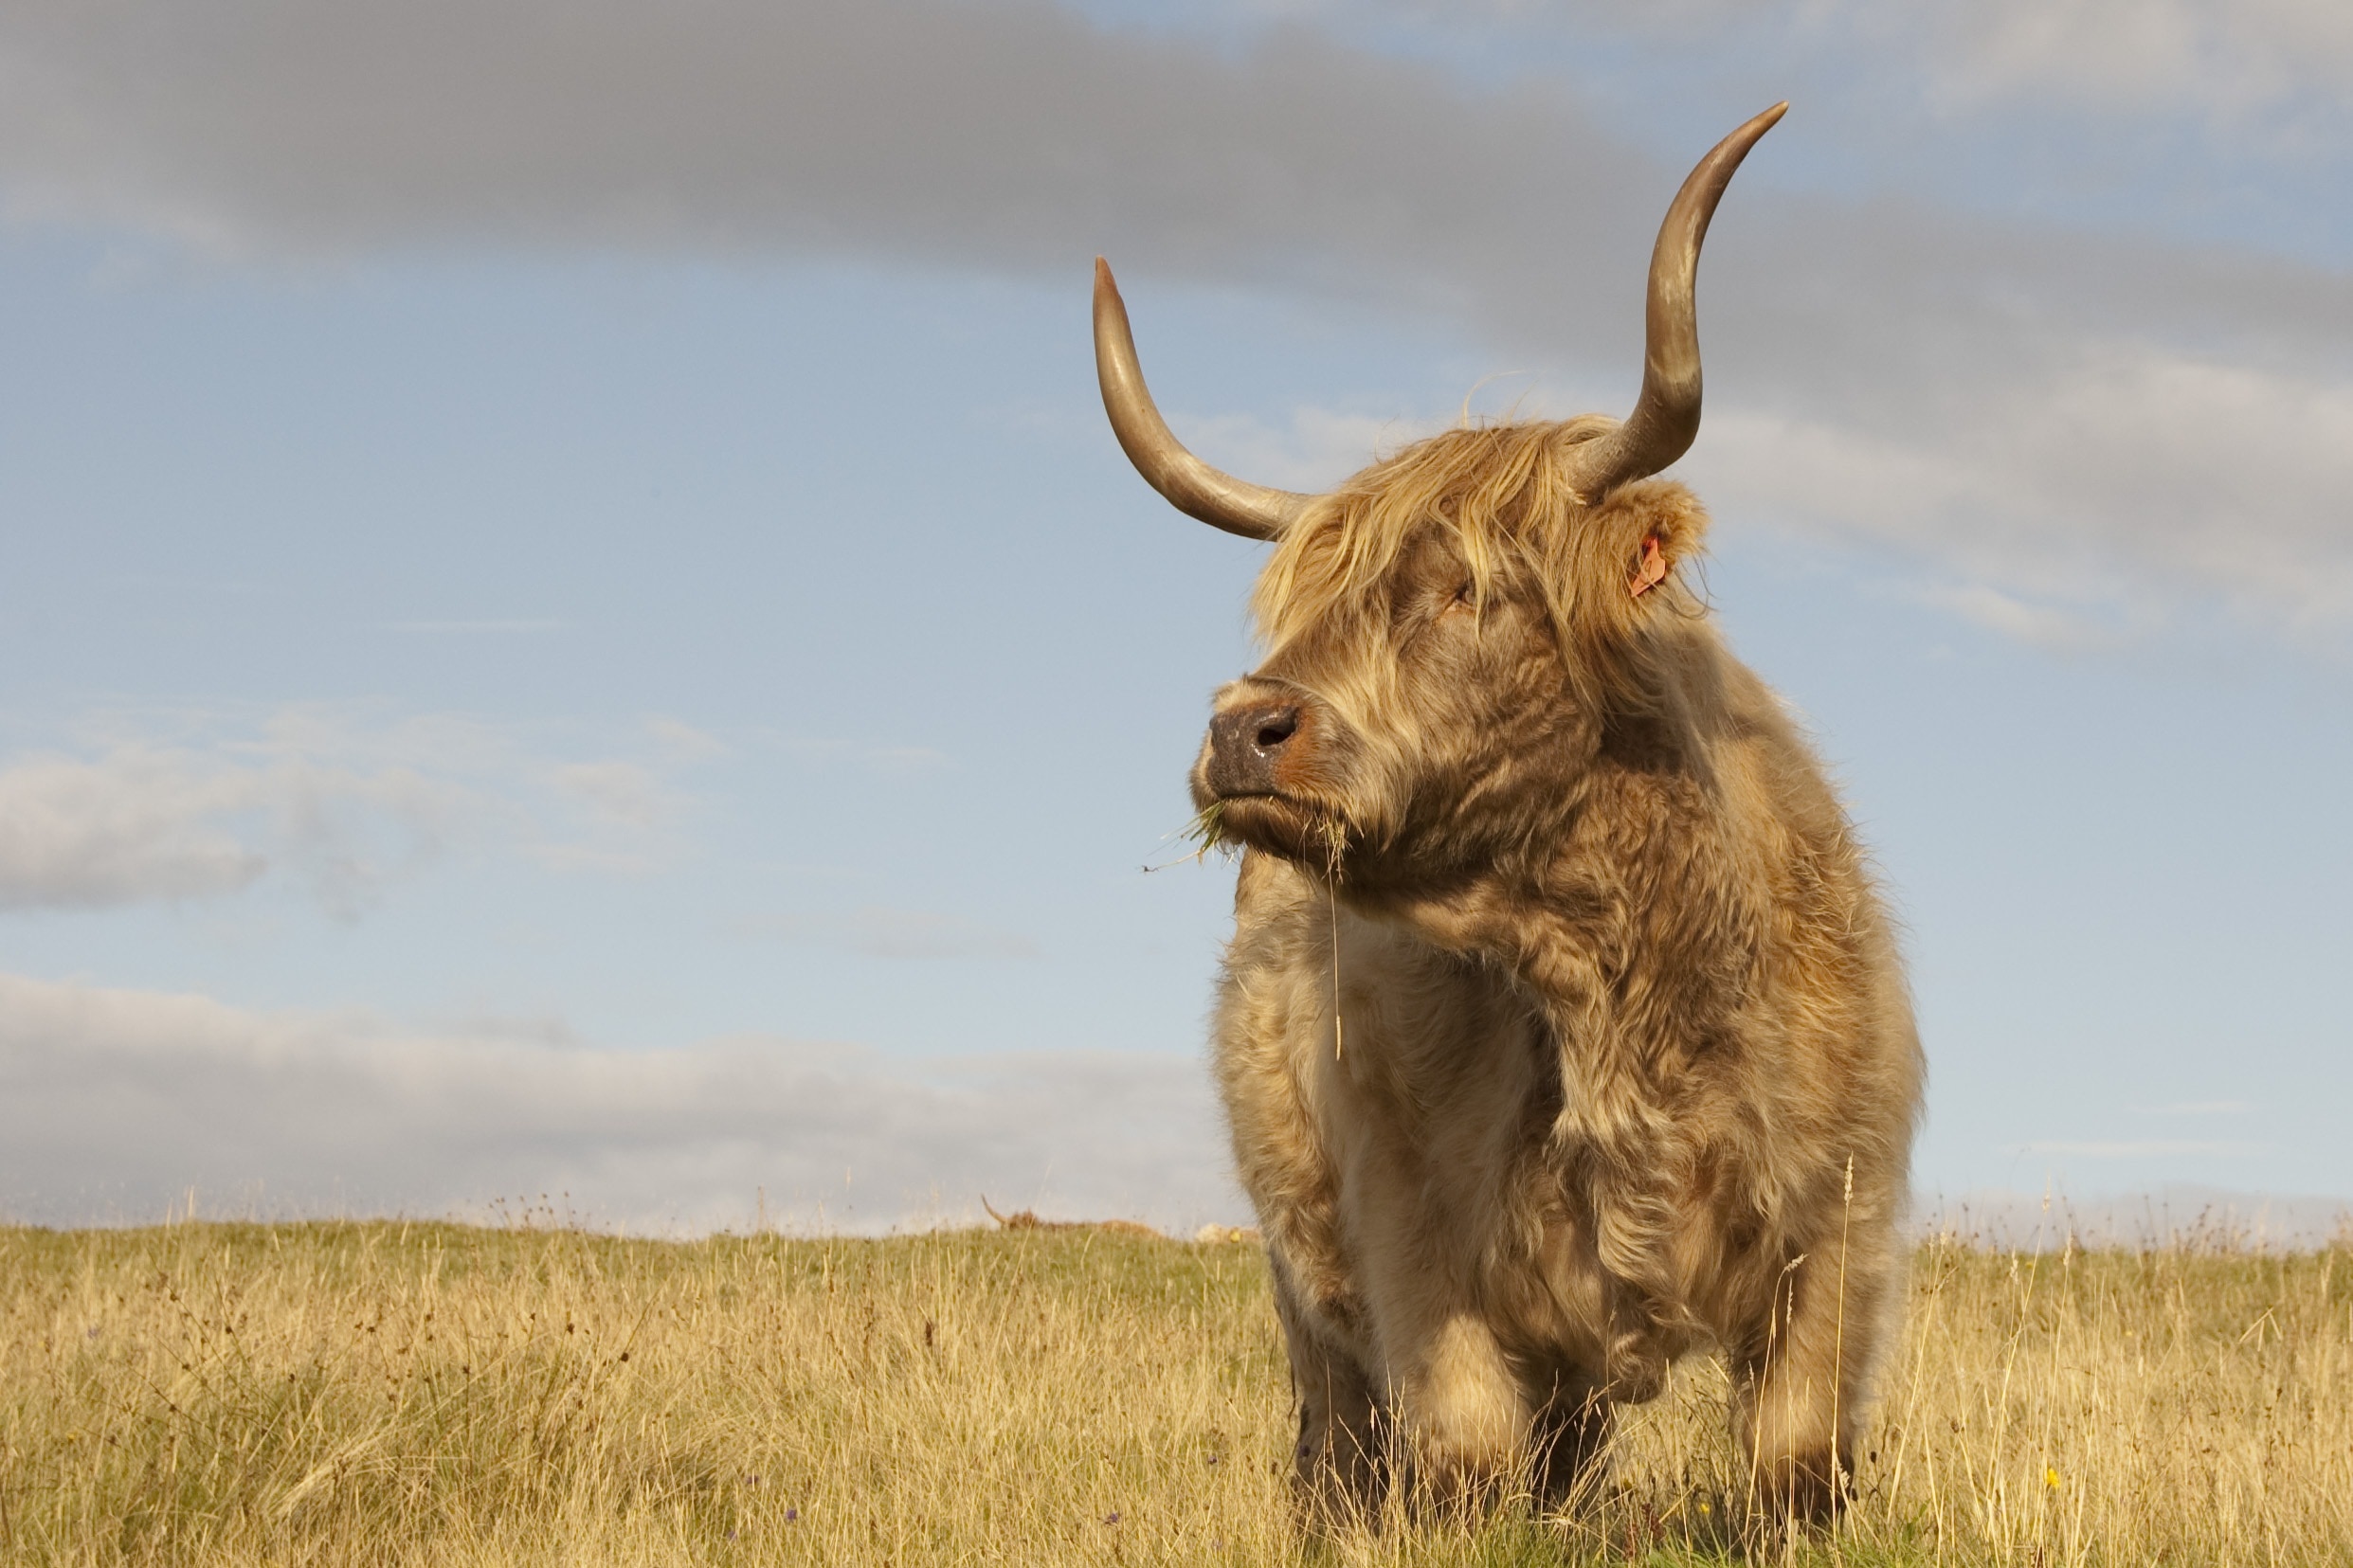 Scotland, Cow, Hay, animal wildlife, one animal